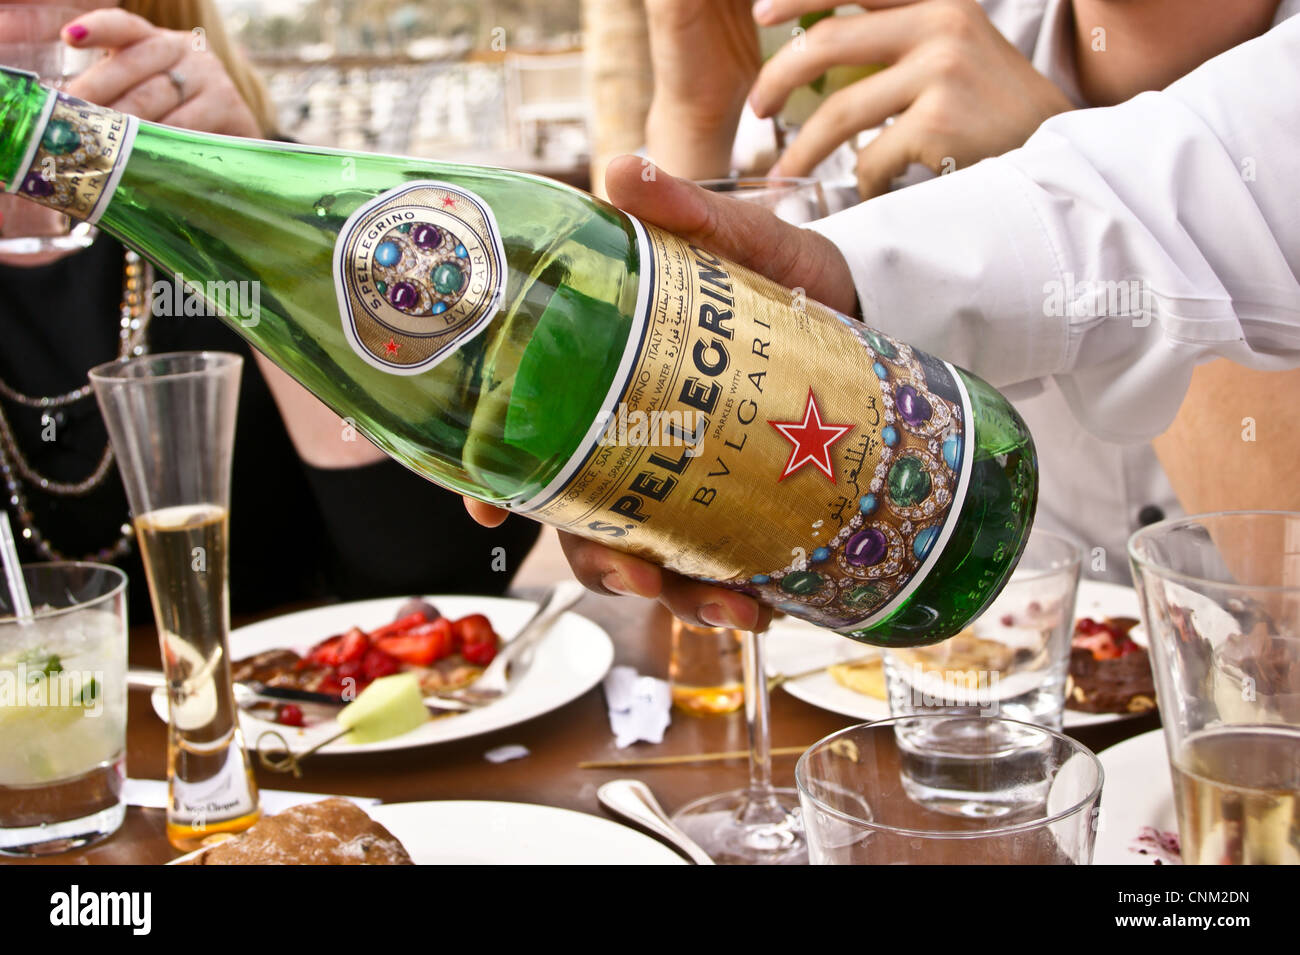 A Bulgari branded bottle of San Pellegrino sparkling mineral water   Park Hyatt Hotel, Dubai Creek, Dubai, United Arab Emirates Stock Photo